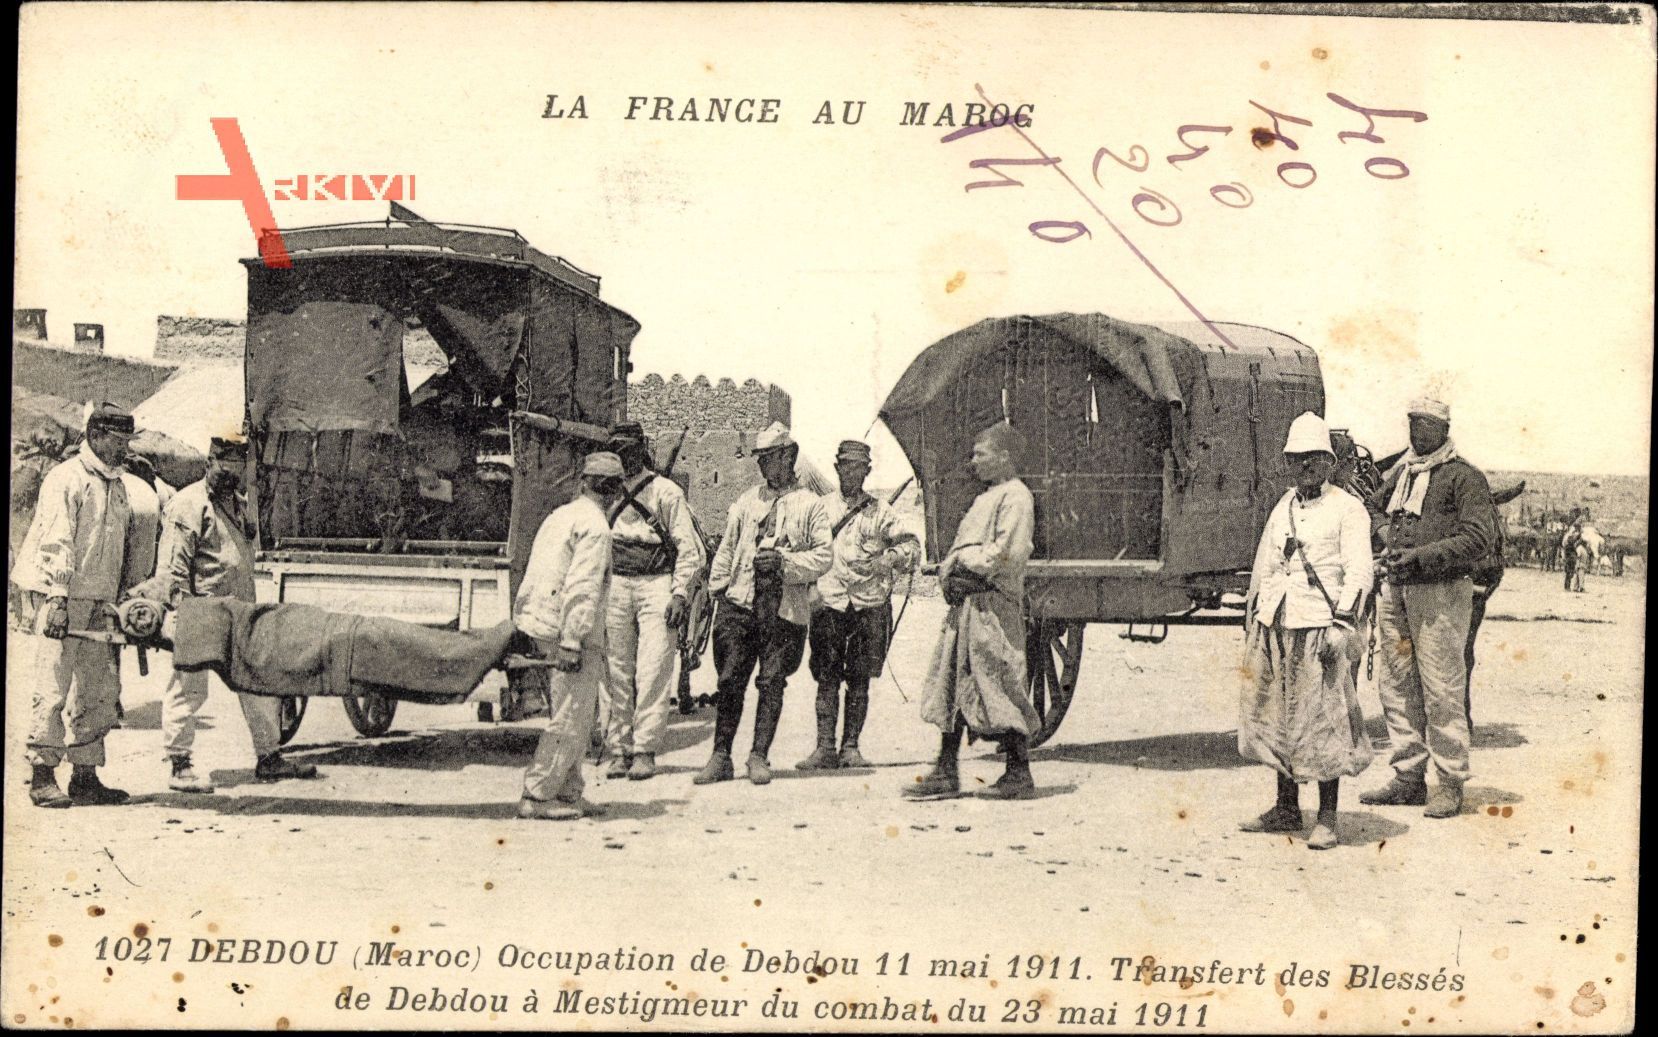 Debdou Marokko, Occupation de Debou 11 mai 1911, Transfer des Blesses